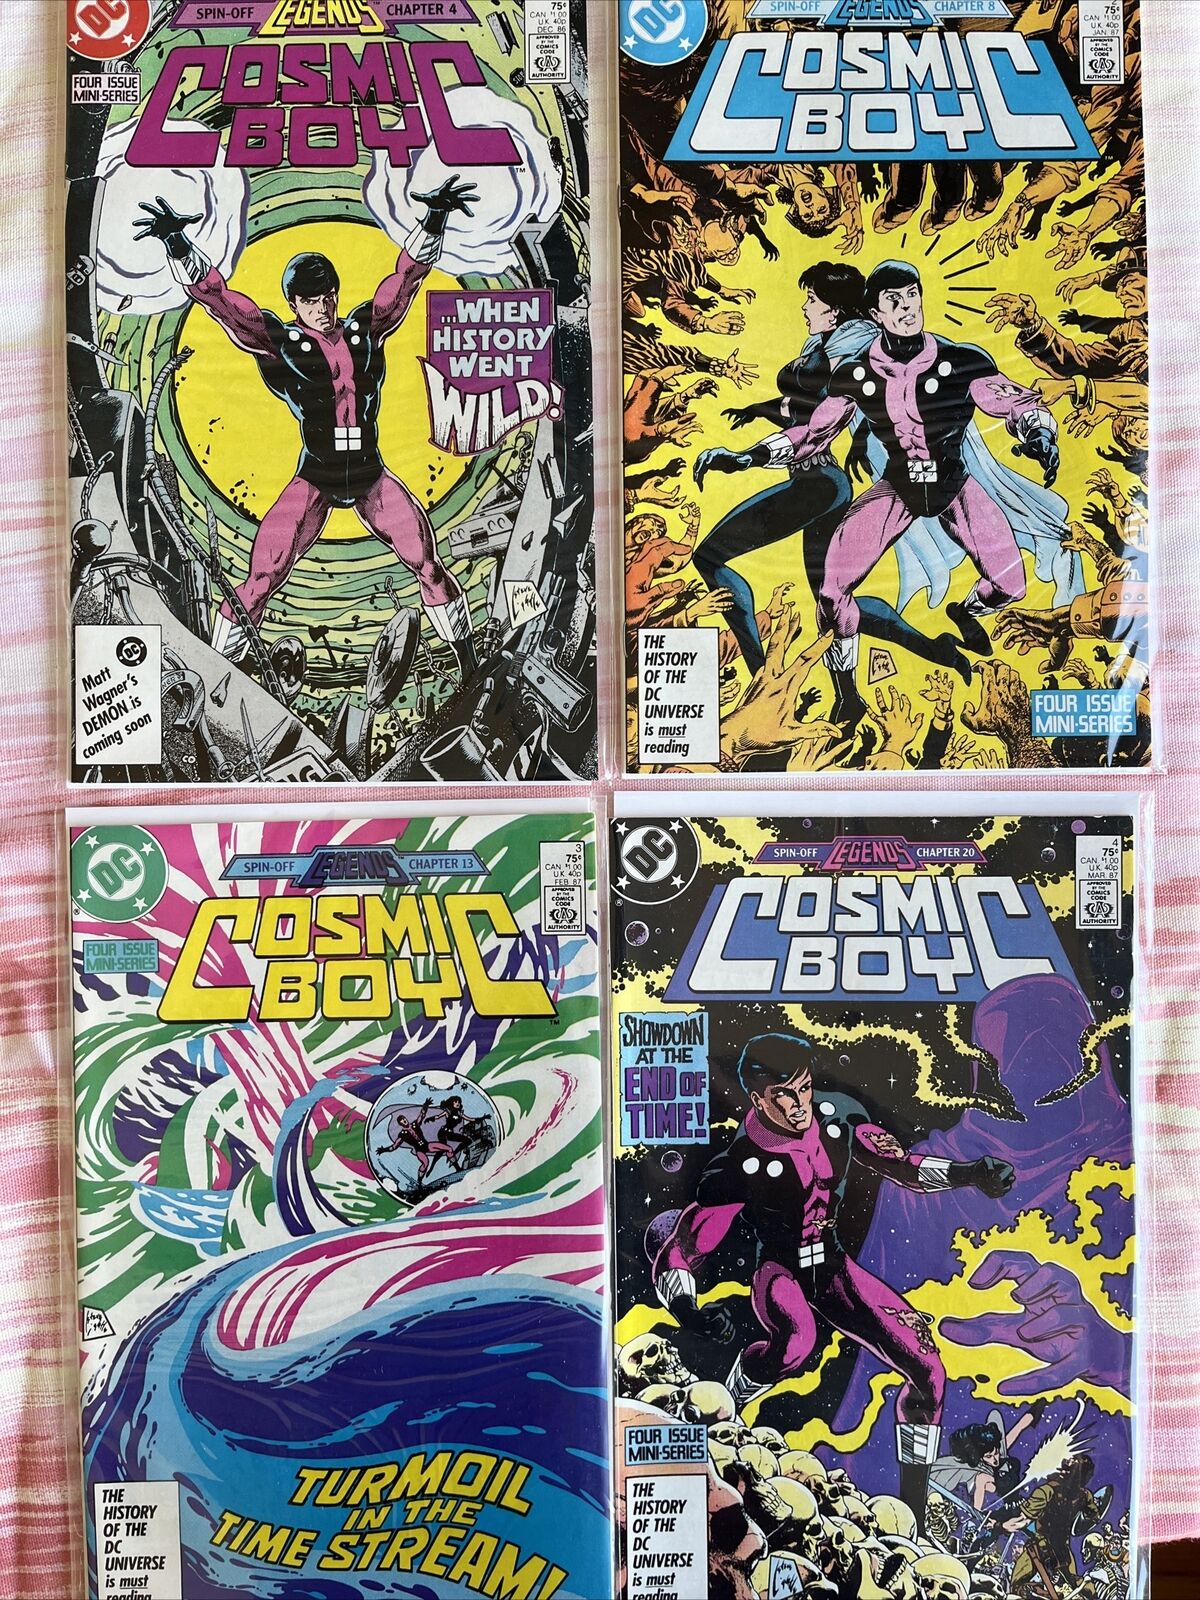 DC Cosmic Boy #1,2,3,4 Mini Series (1986-1987) NM Copper Age Comics Legends